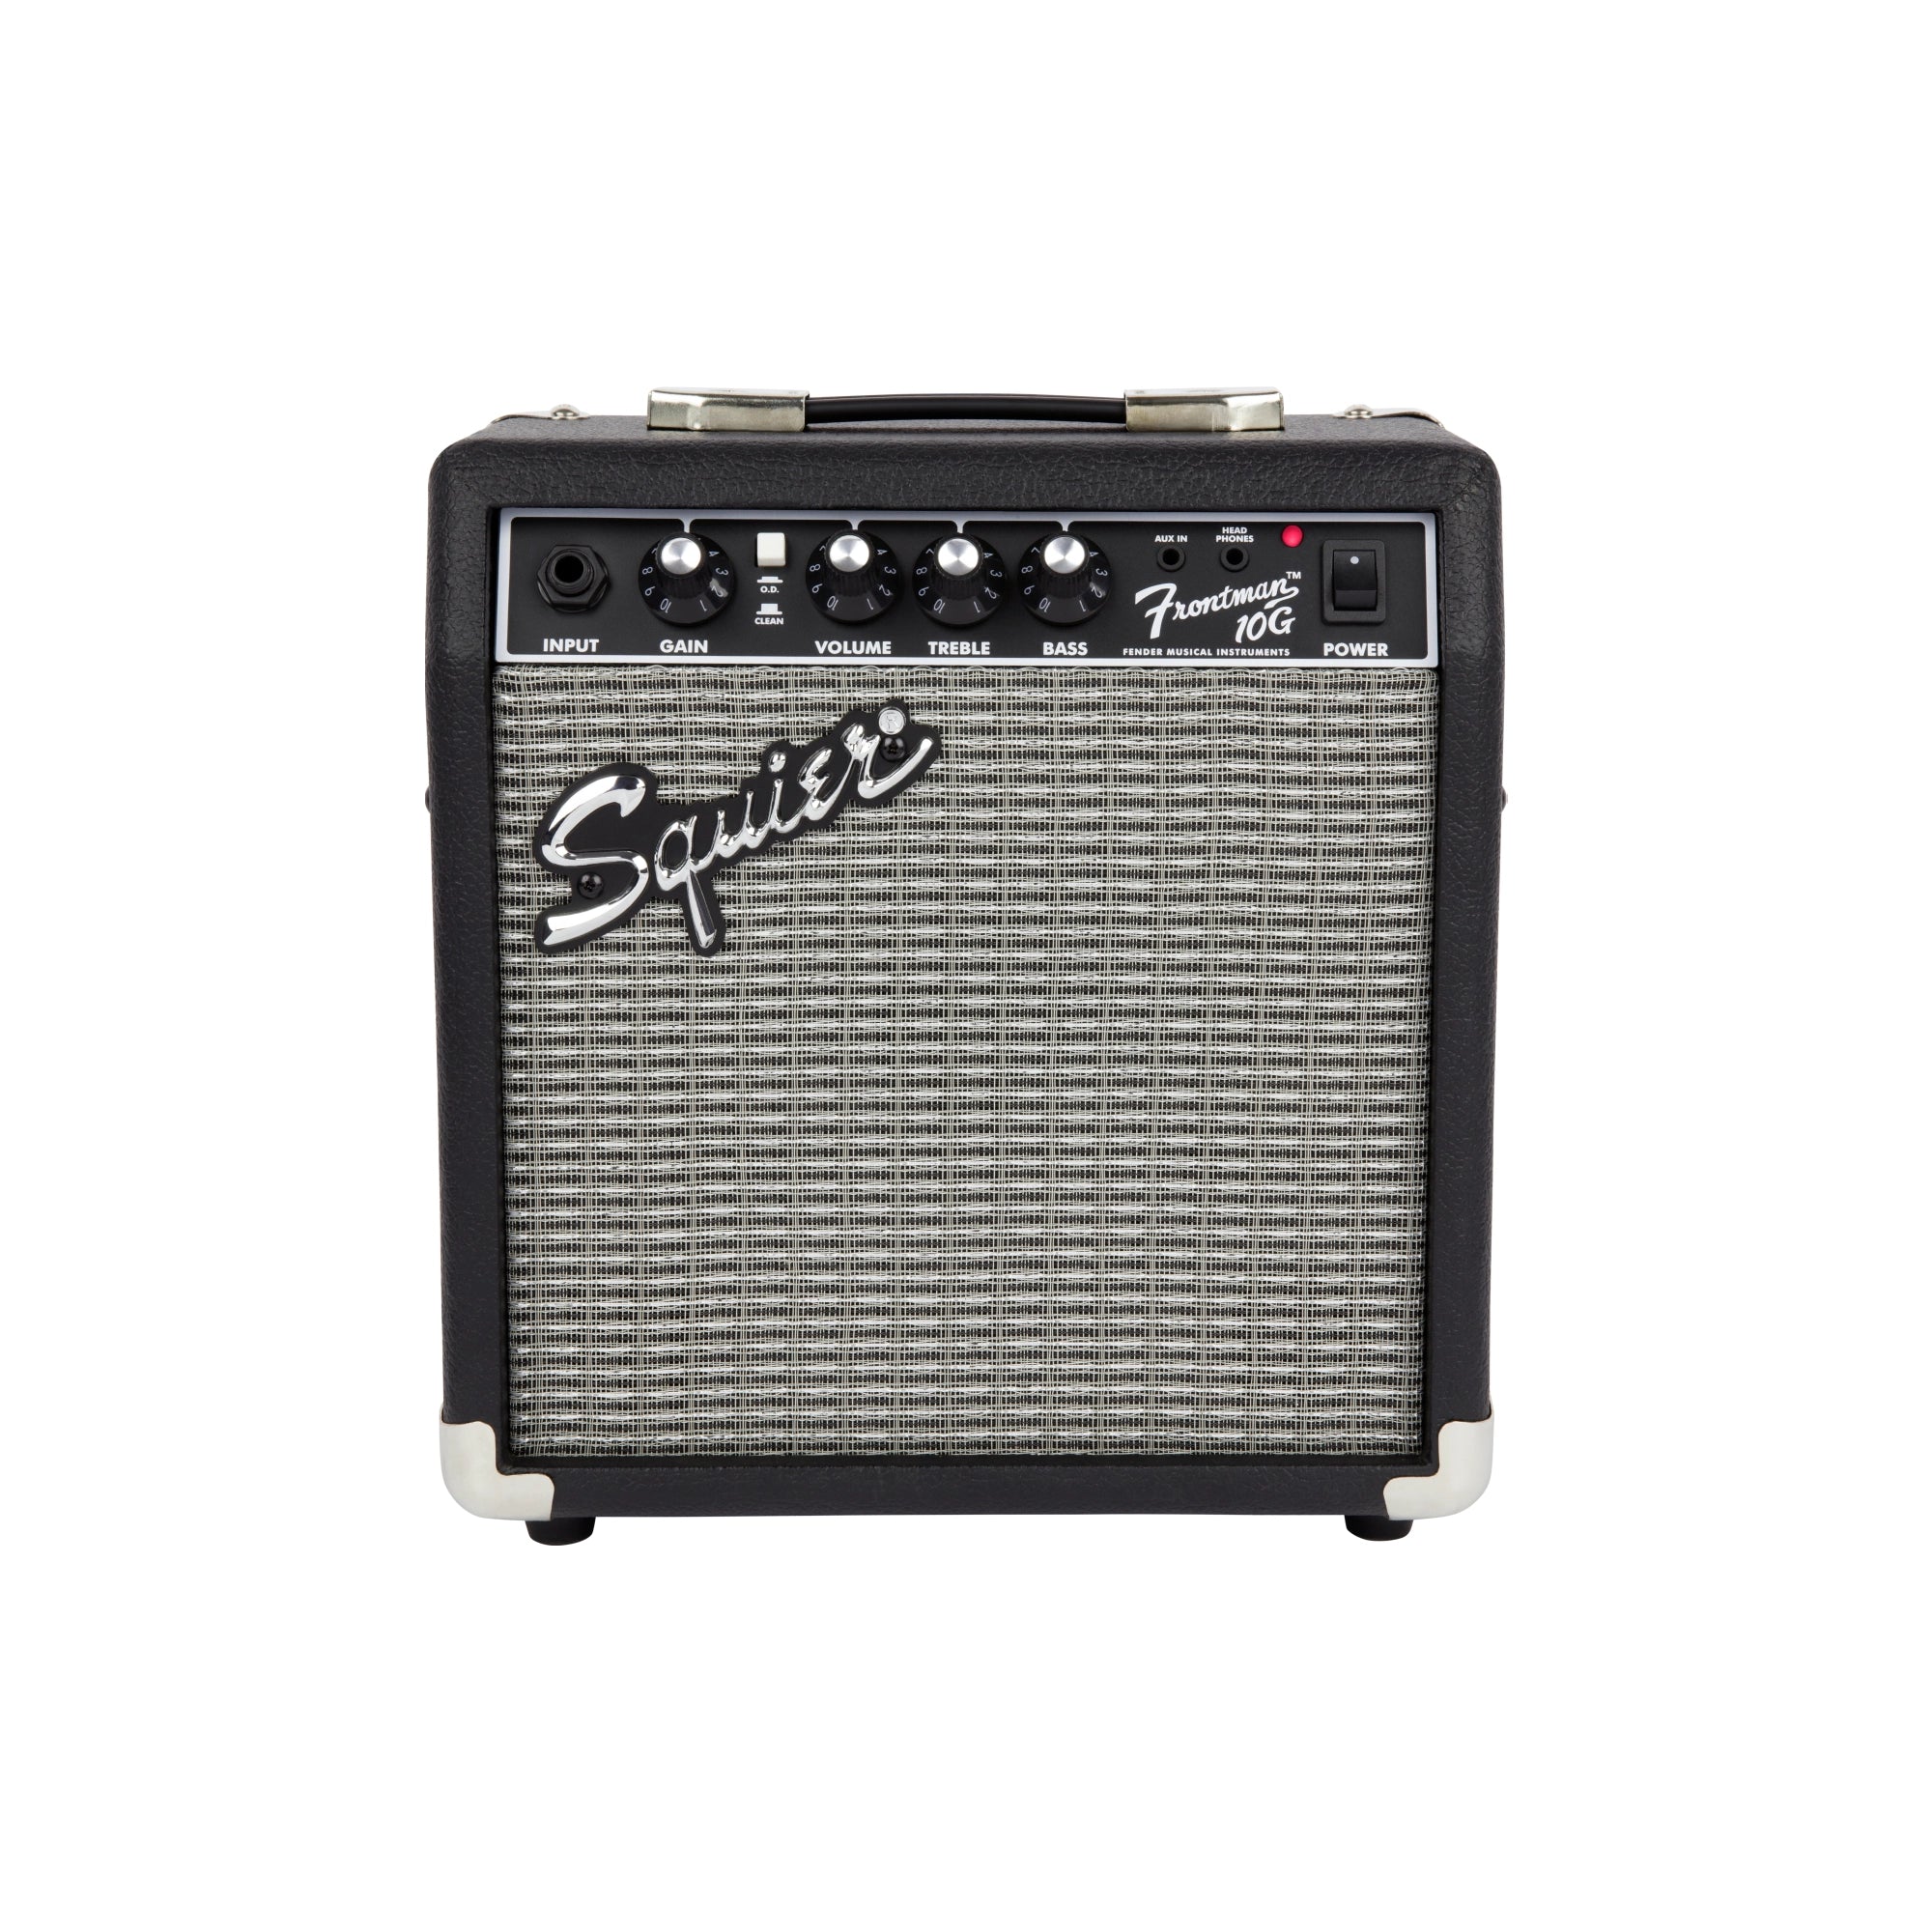 Squier Stratocaster Electric Guitar Pack - Brown Sunburst / Fender Frontman 10G Amp